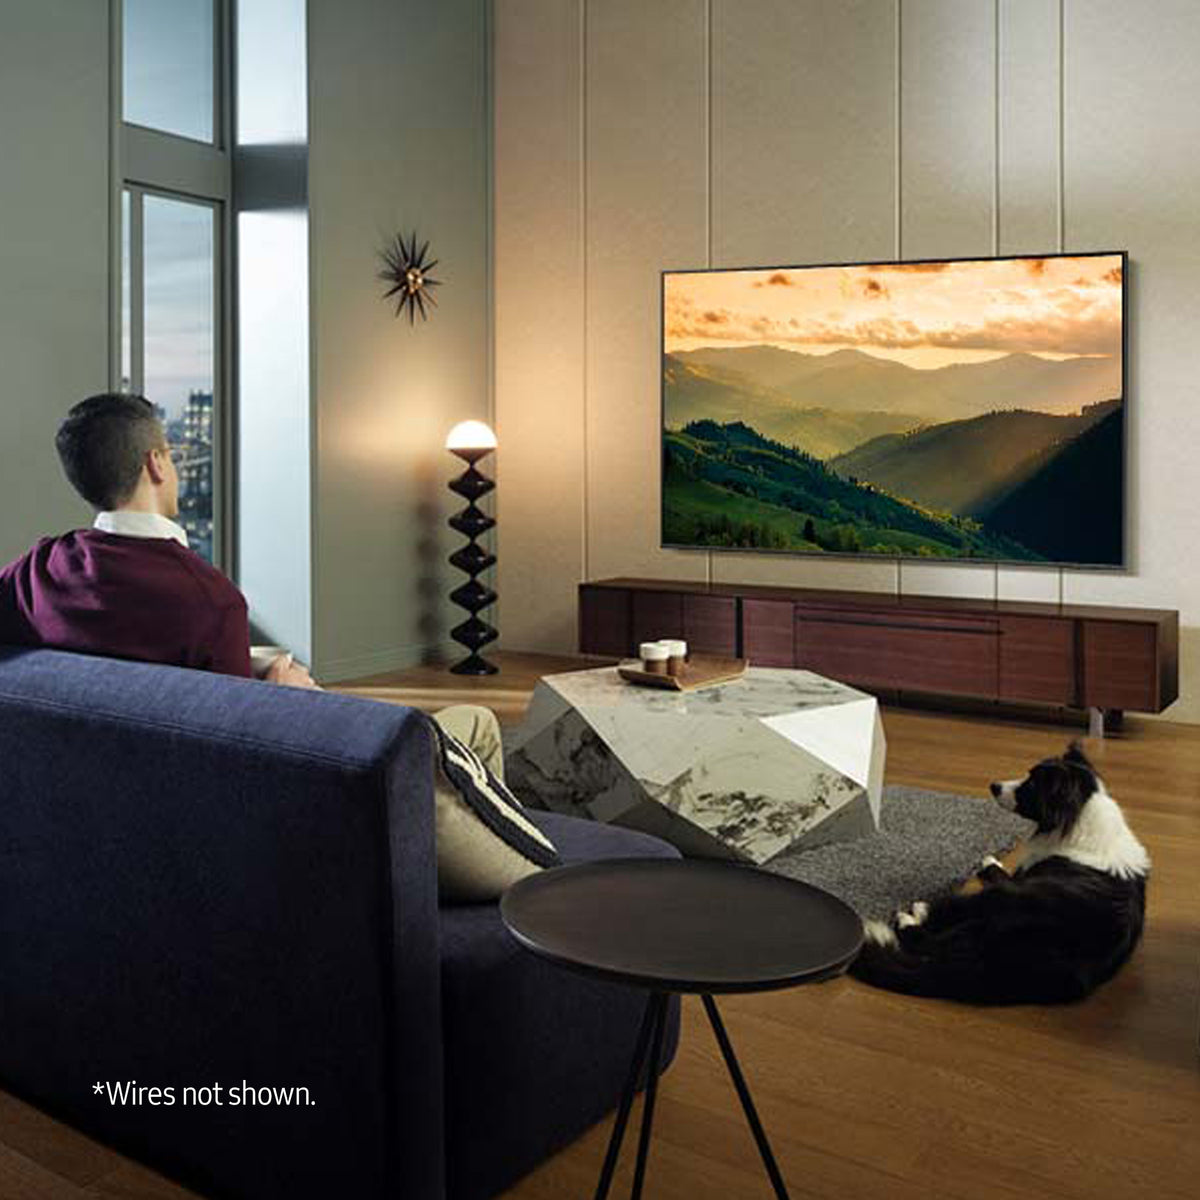 Samsung Q60C 55&quot; 4K HDR QLED Smart TV - Black | QE55Q60CAUXXU from Samsung - DID Electrical